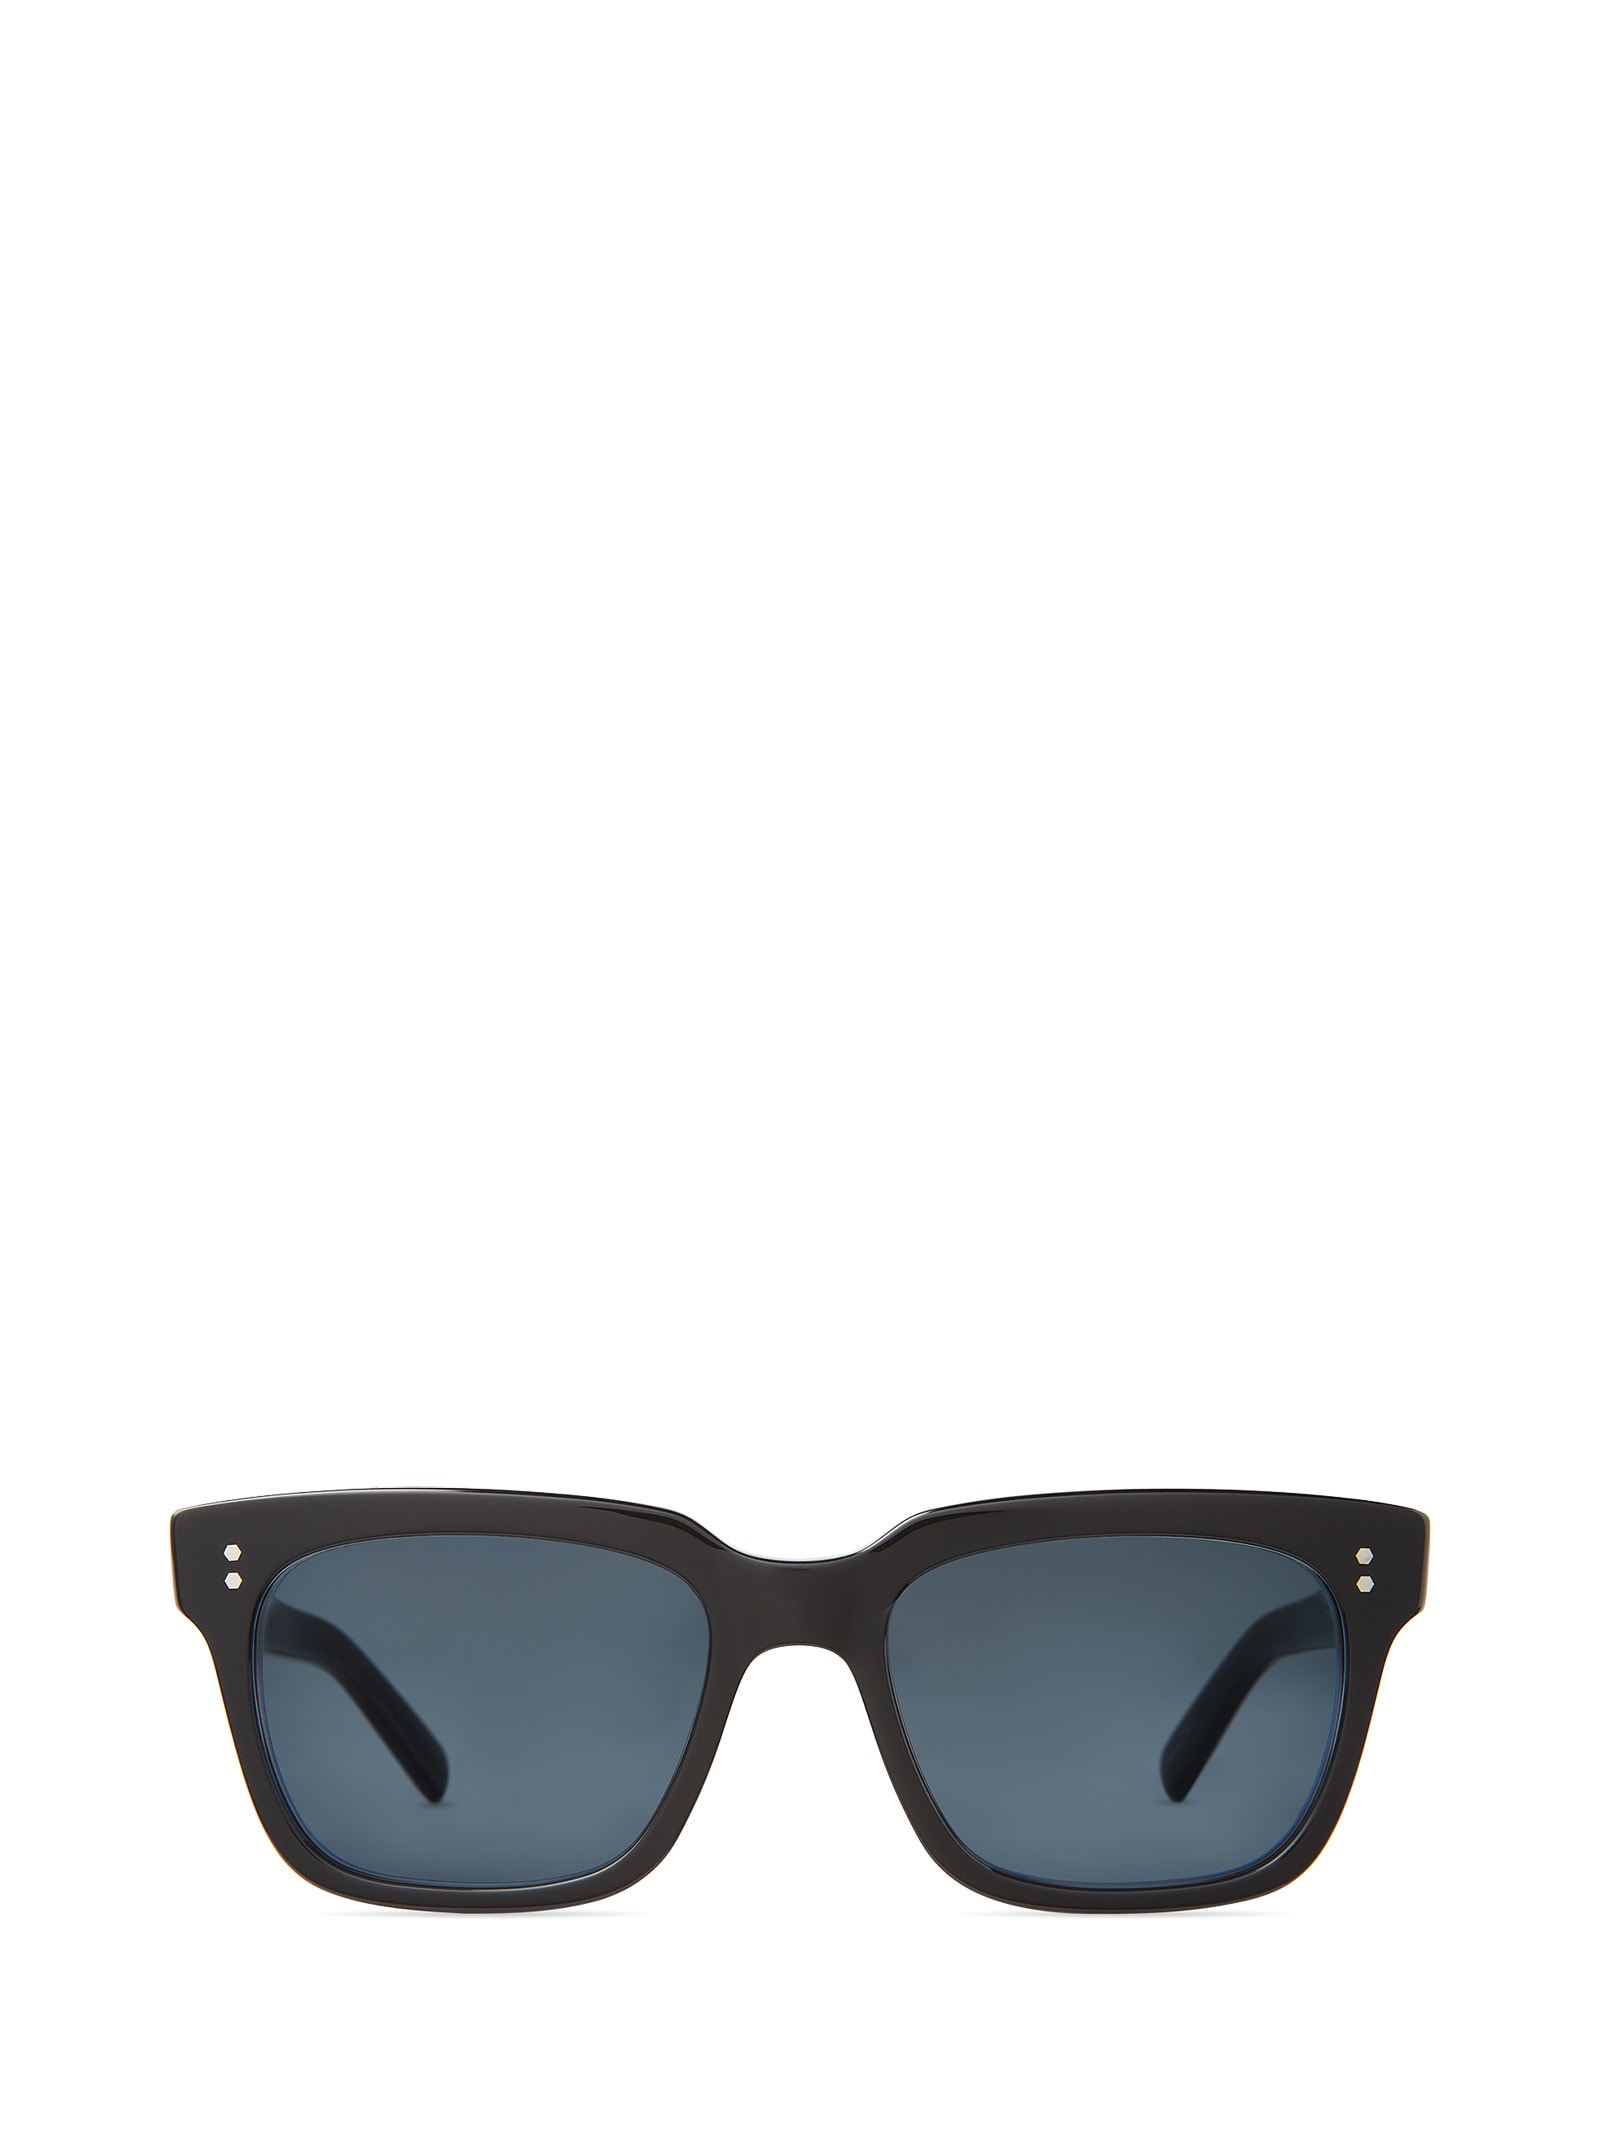 Mr Leight Arnie S Black-gunmetal Sunglasses